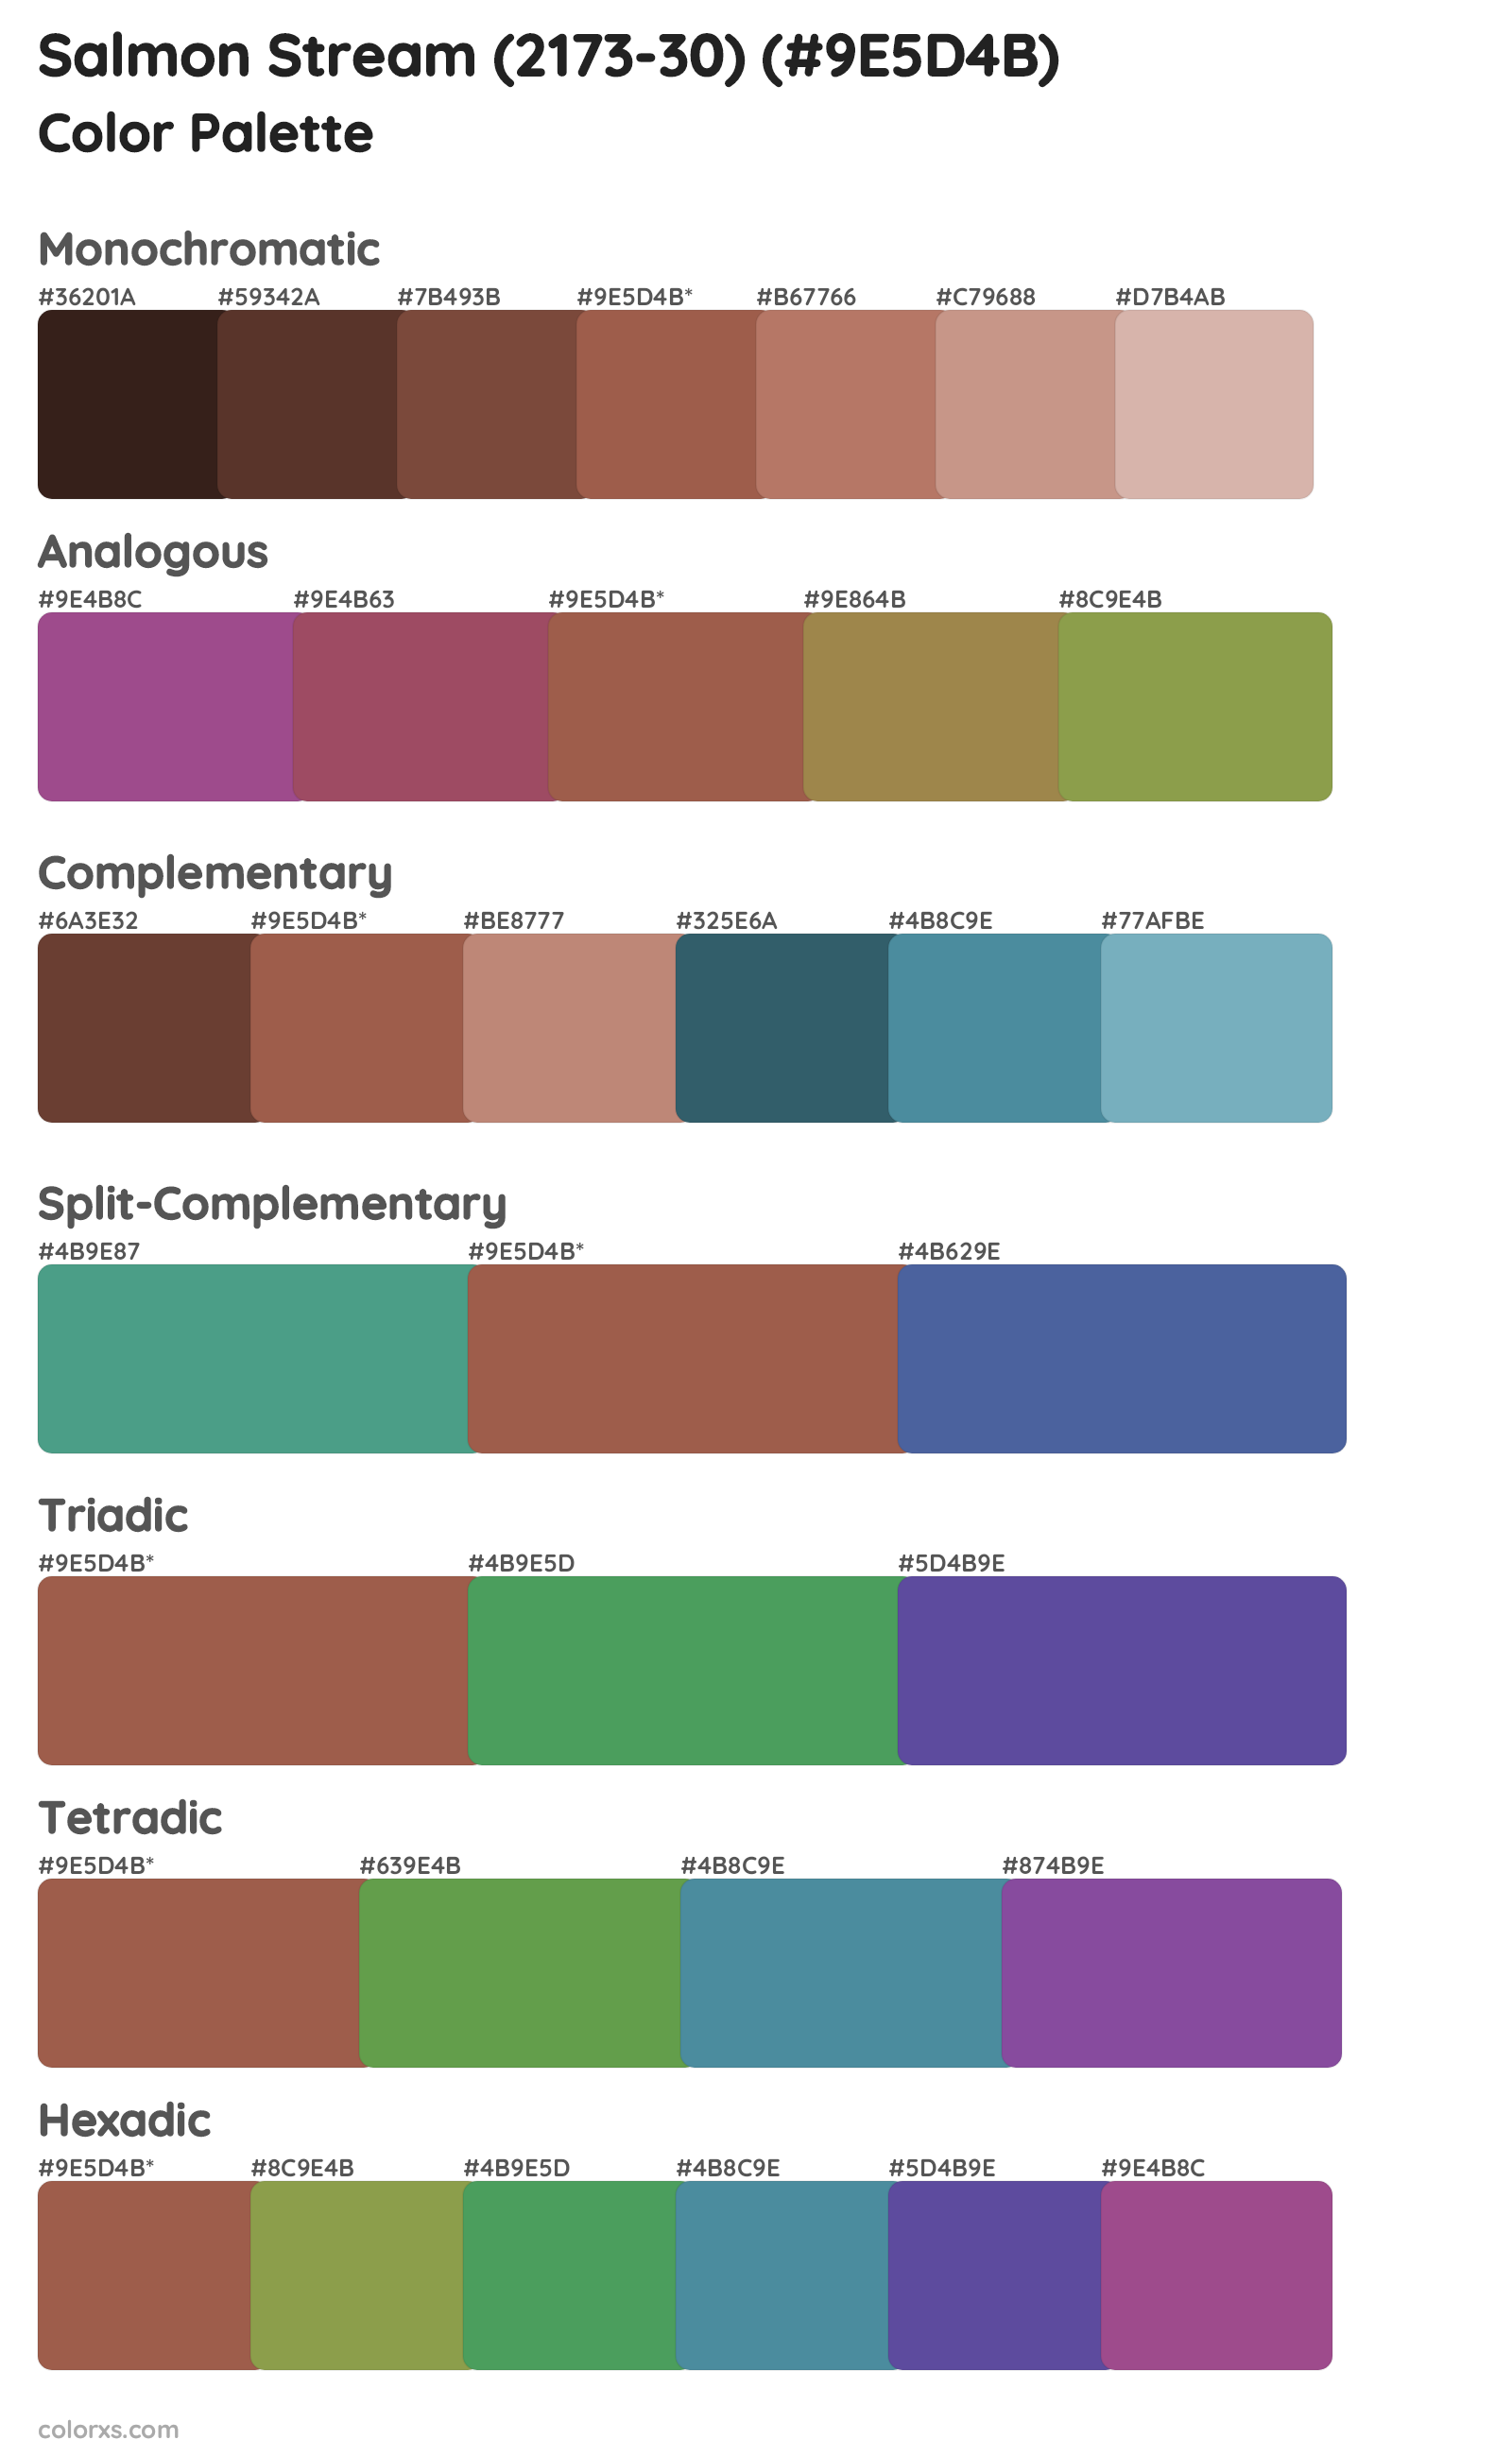 Salmon Stream (2173-30) Color Scheme Palettes